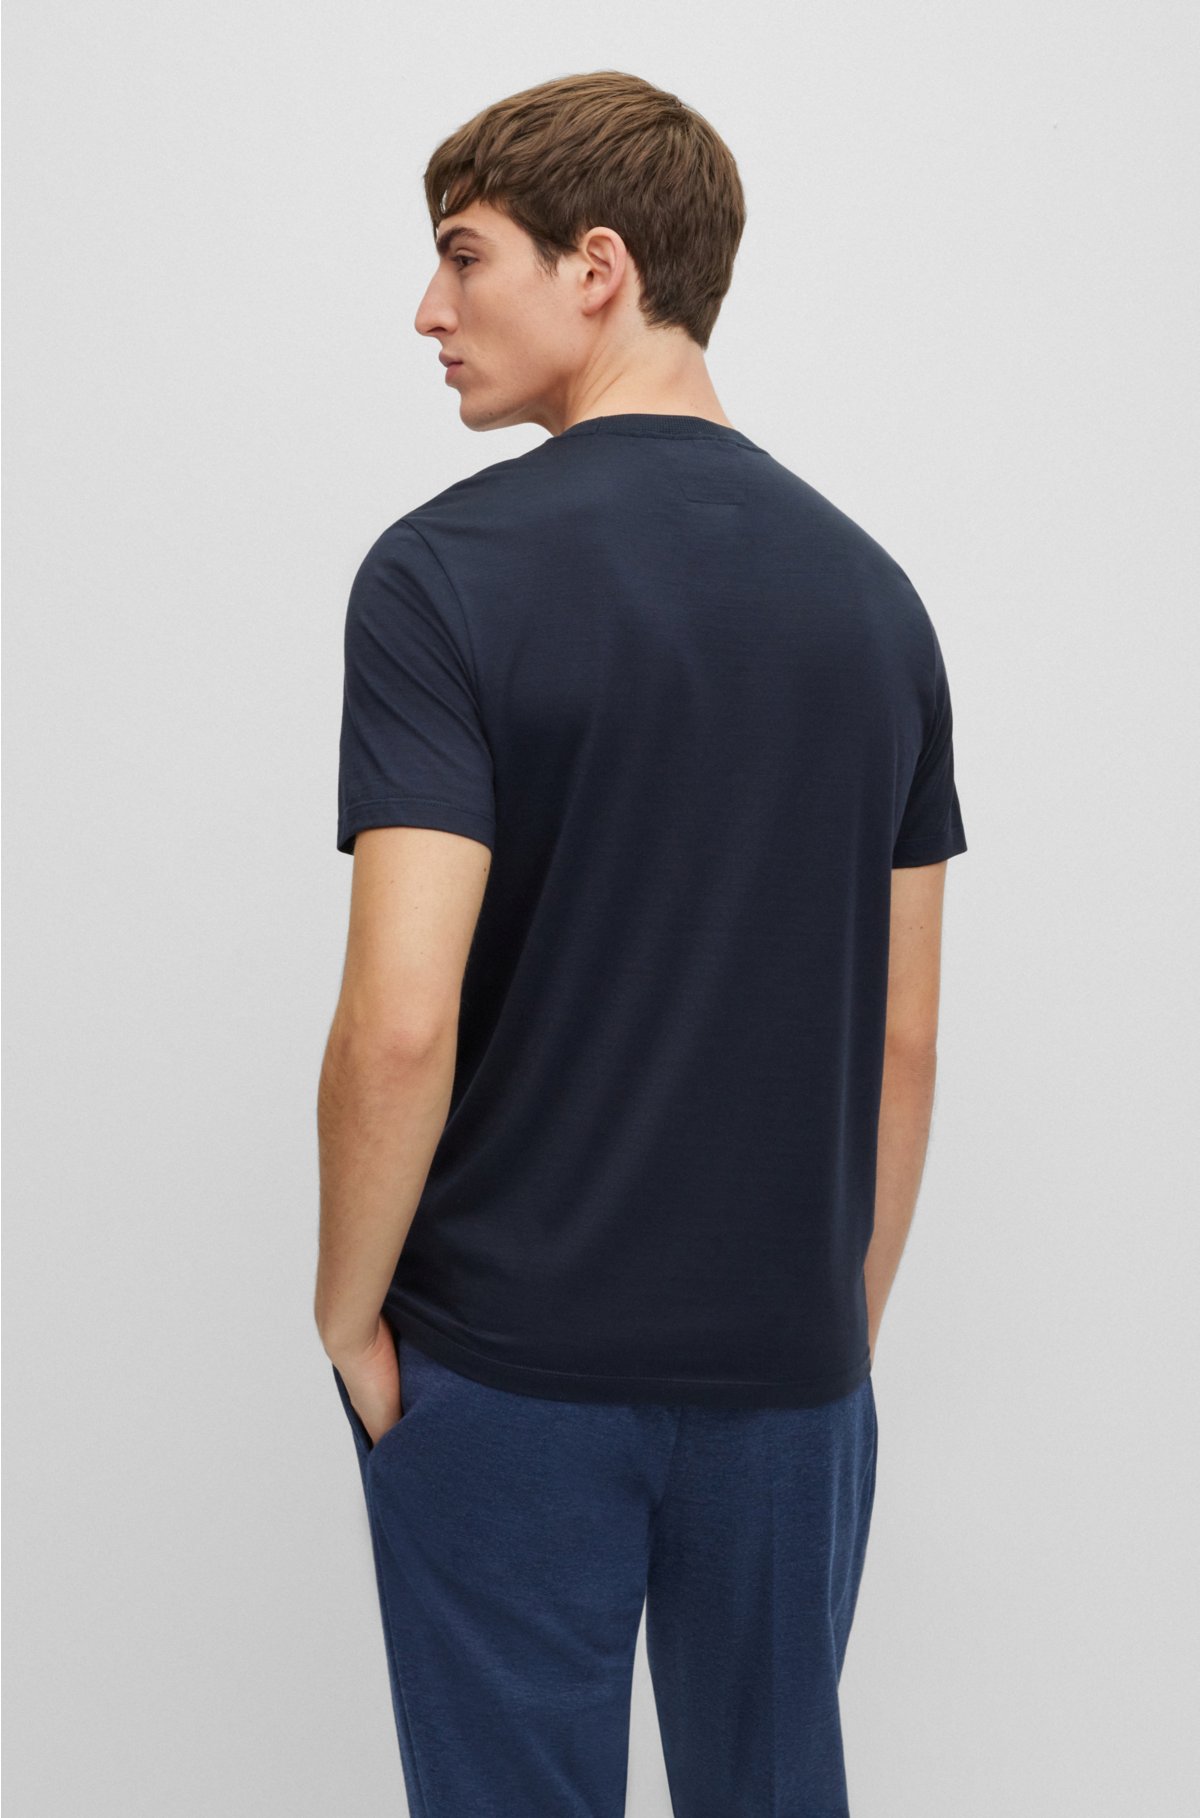 Louis Vuitton Chain Detail T Shirt, Men's Fashion, Tops & Sets